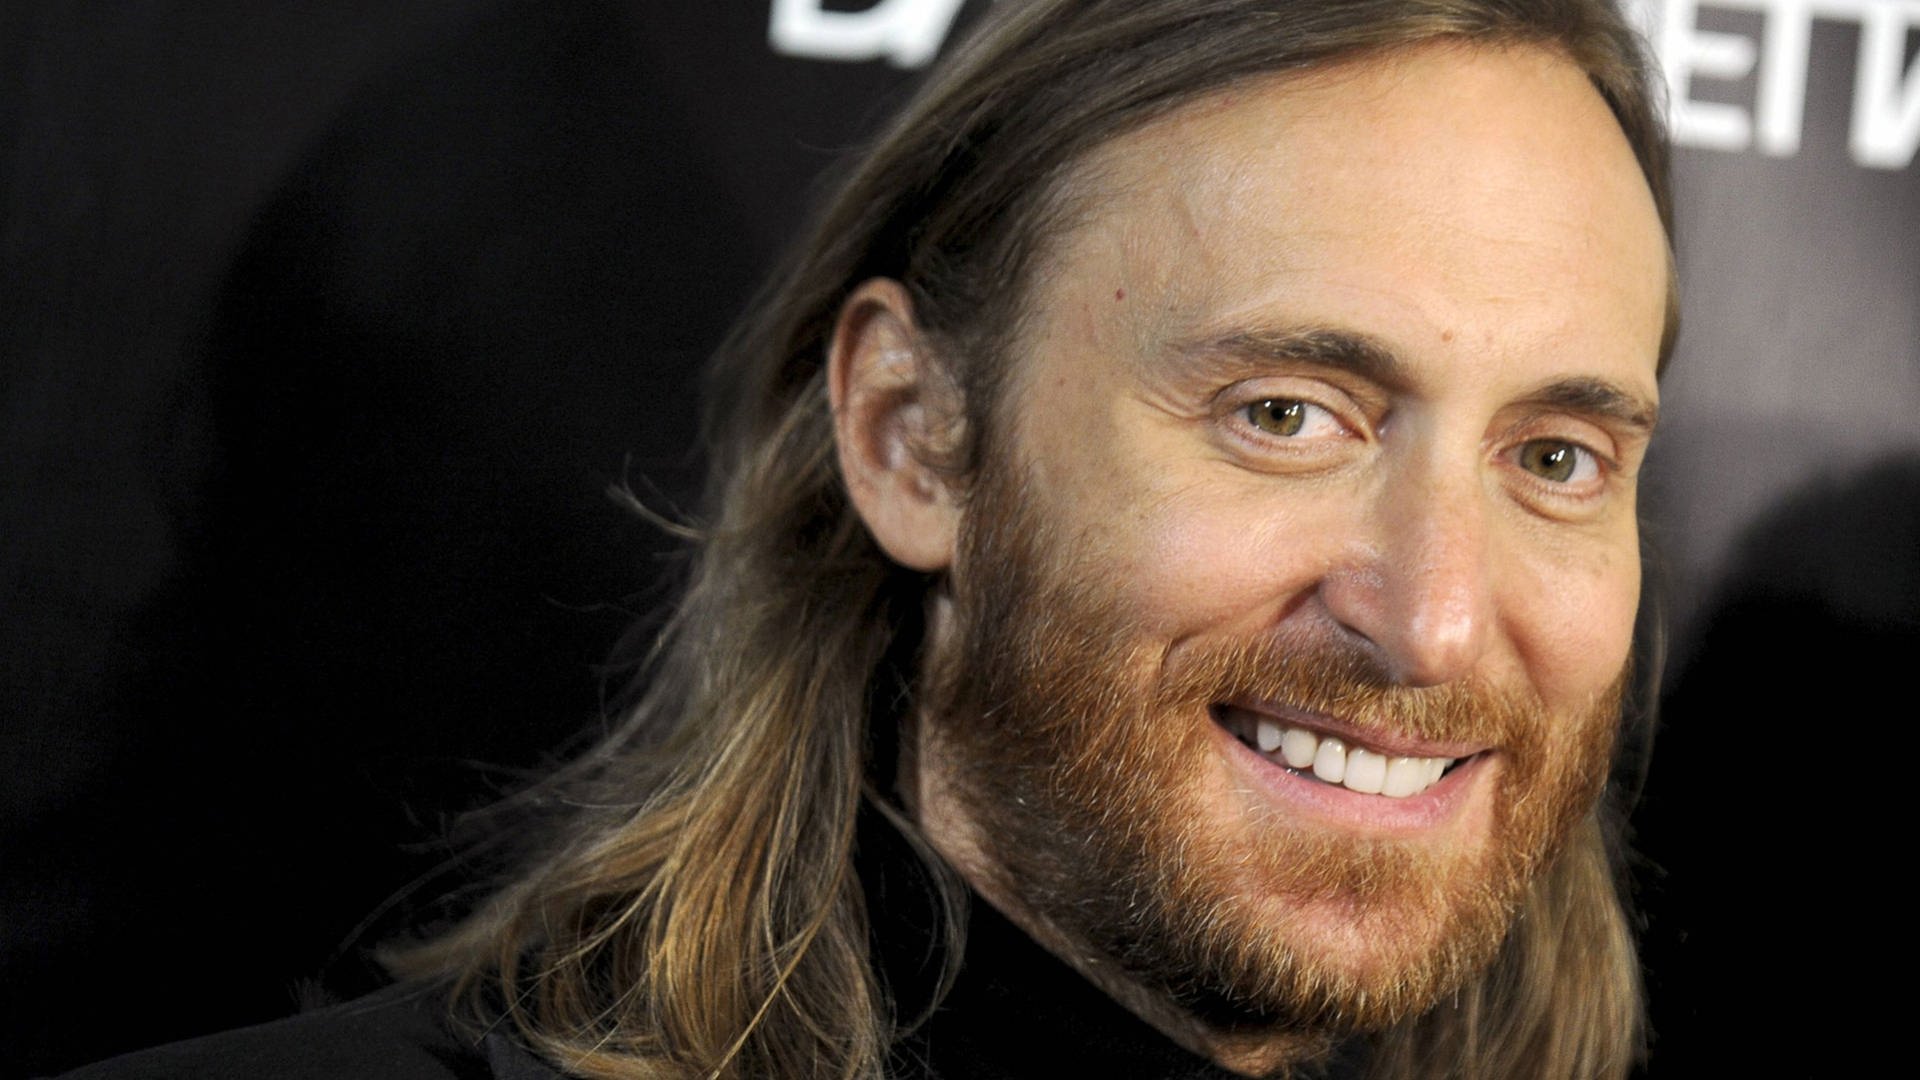 David Guetta - Dangerous (Foto: imago/Future Image)